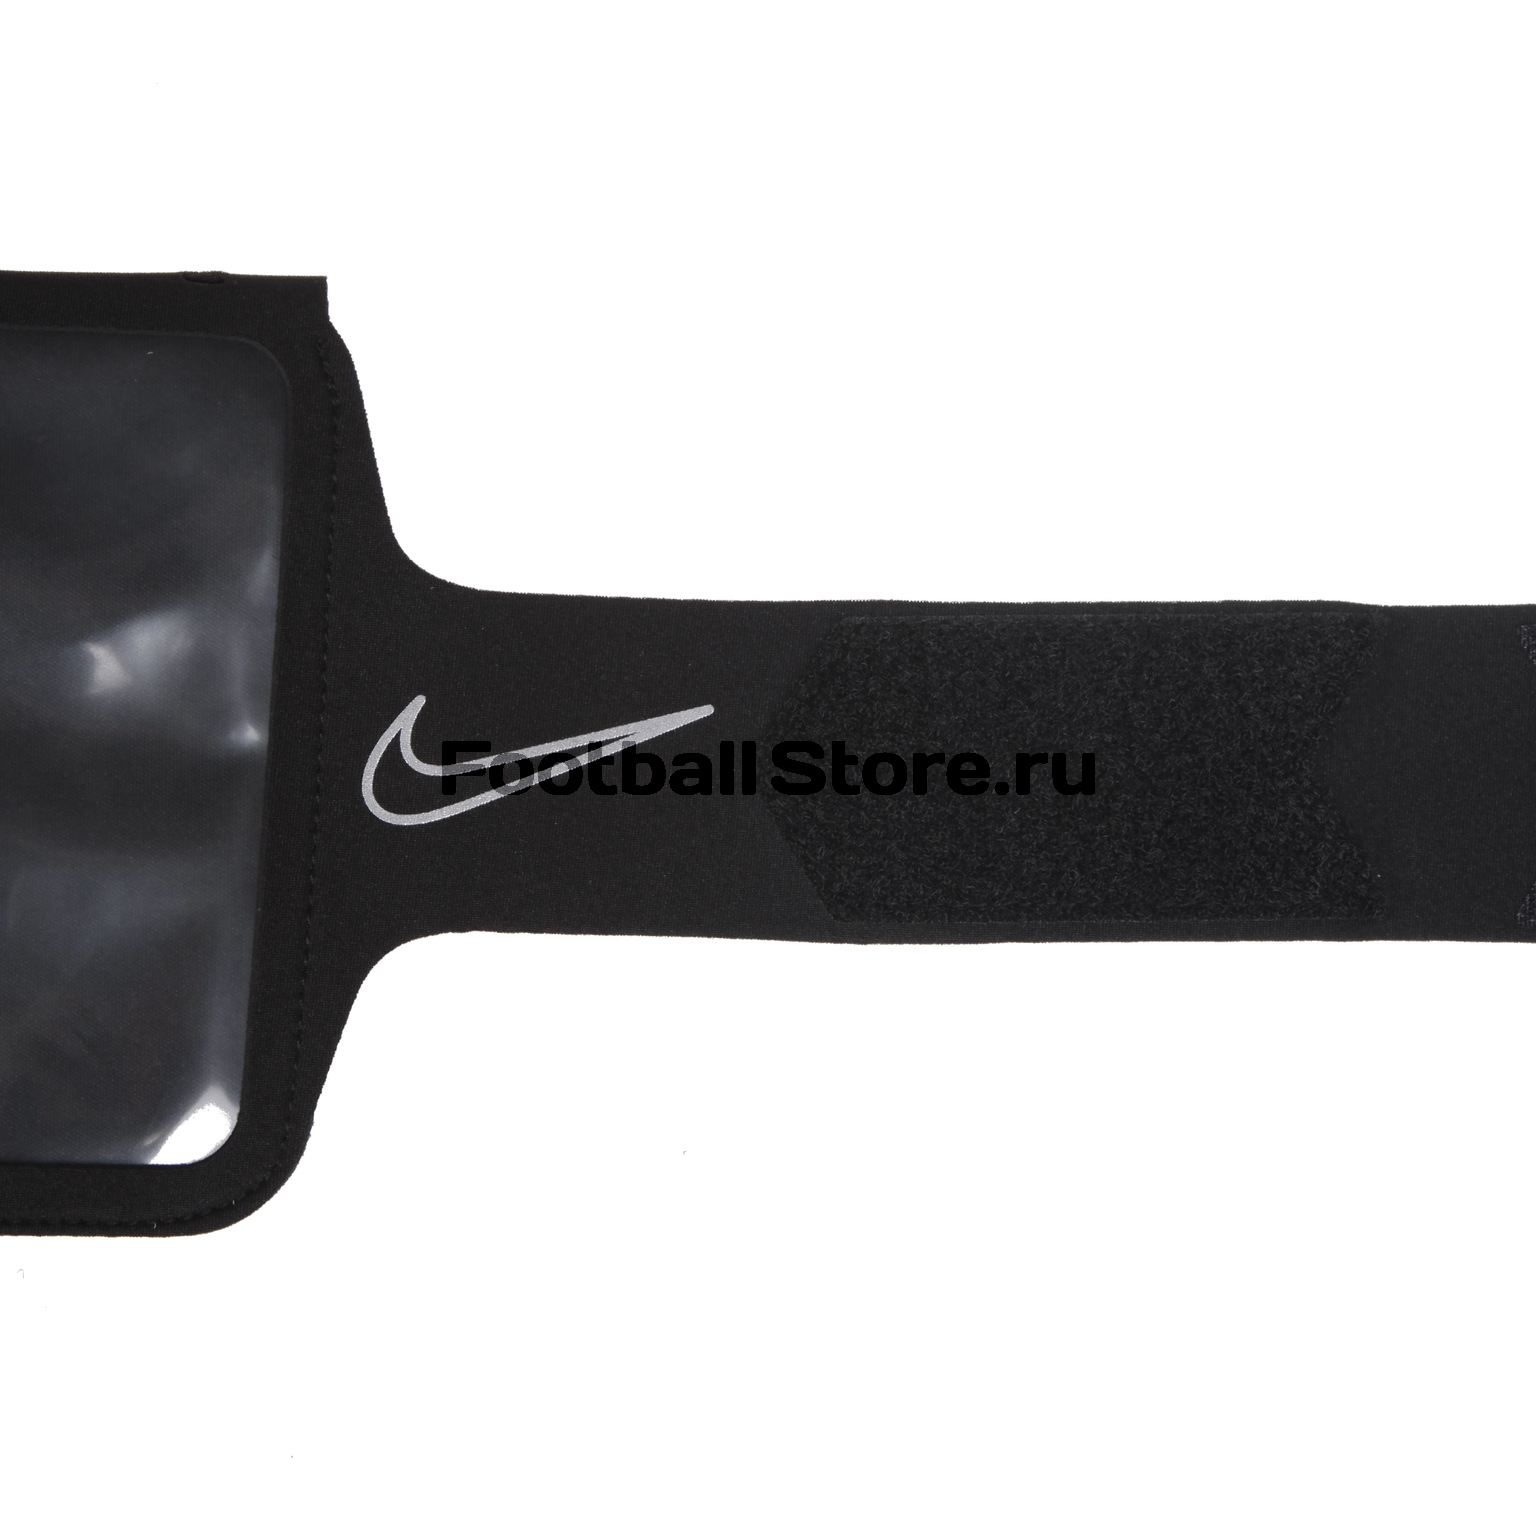 Чехол для телефона Nike Lightweight Arn Band 2.0 N.RN.43.001.OS